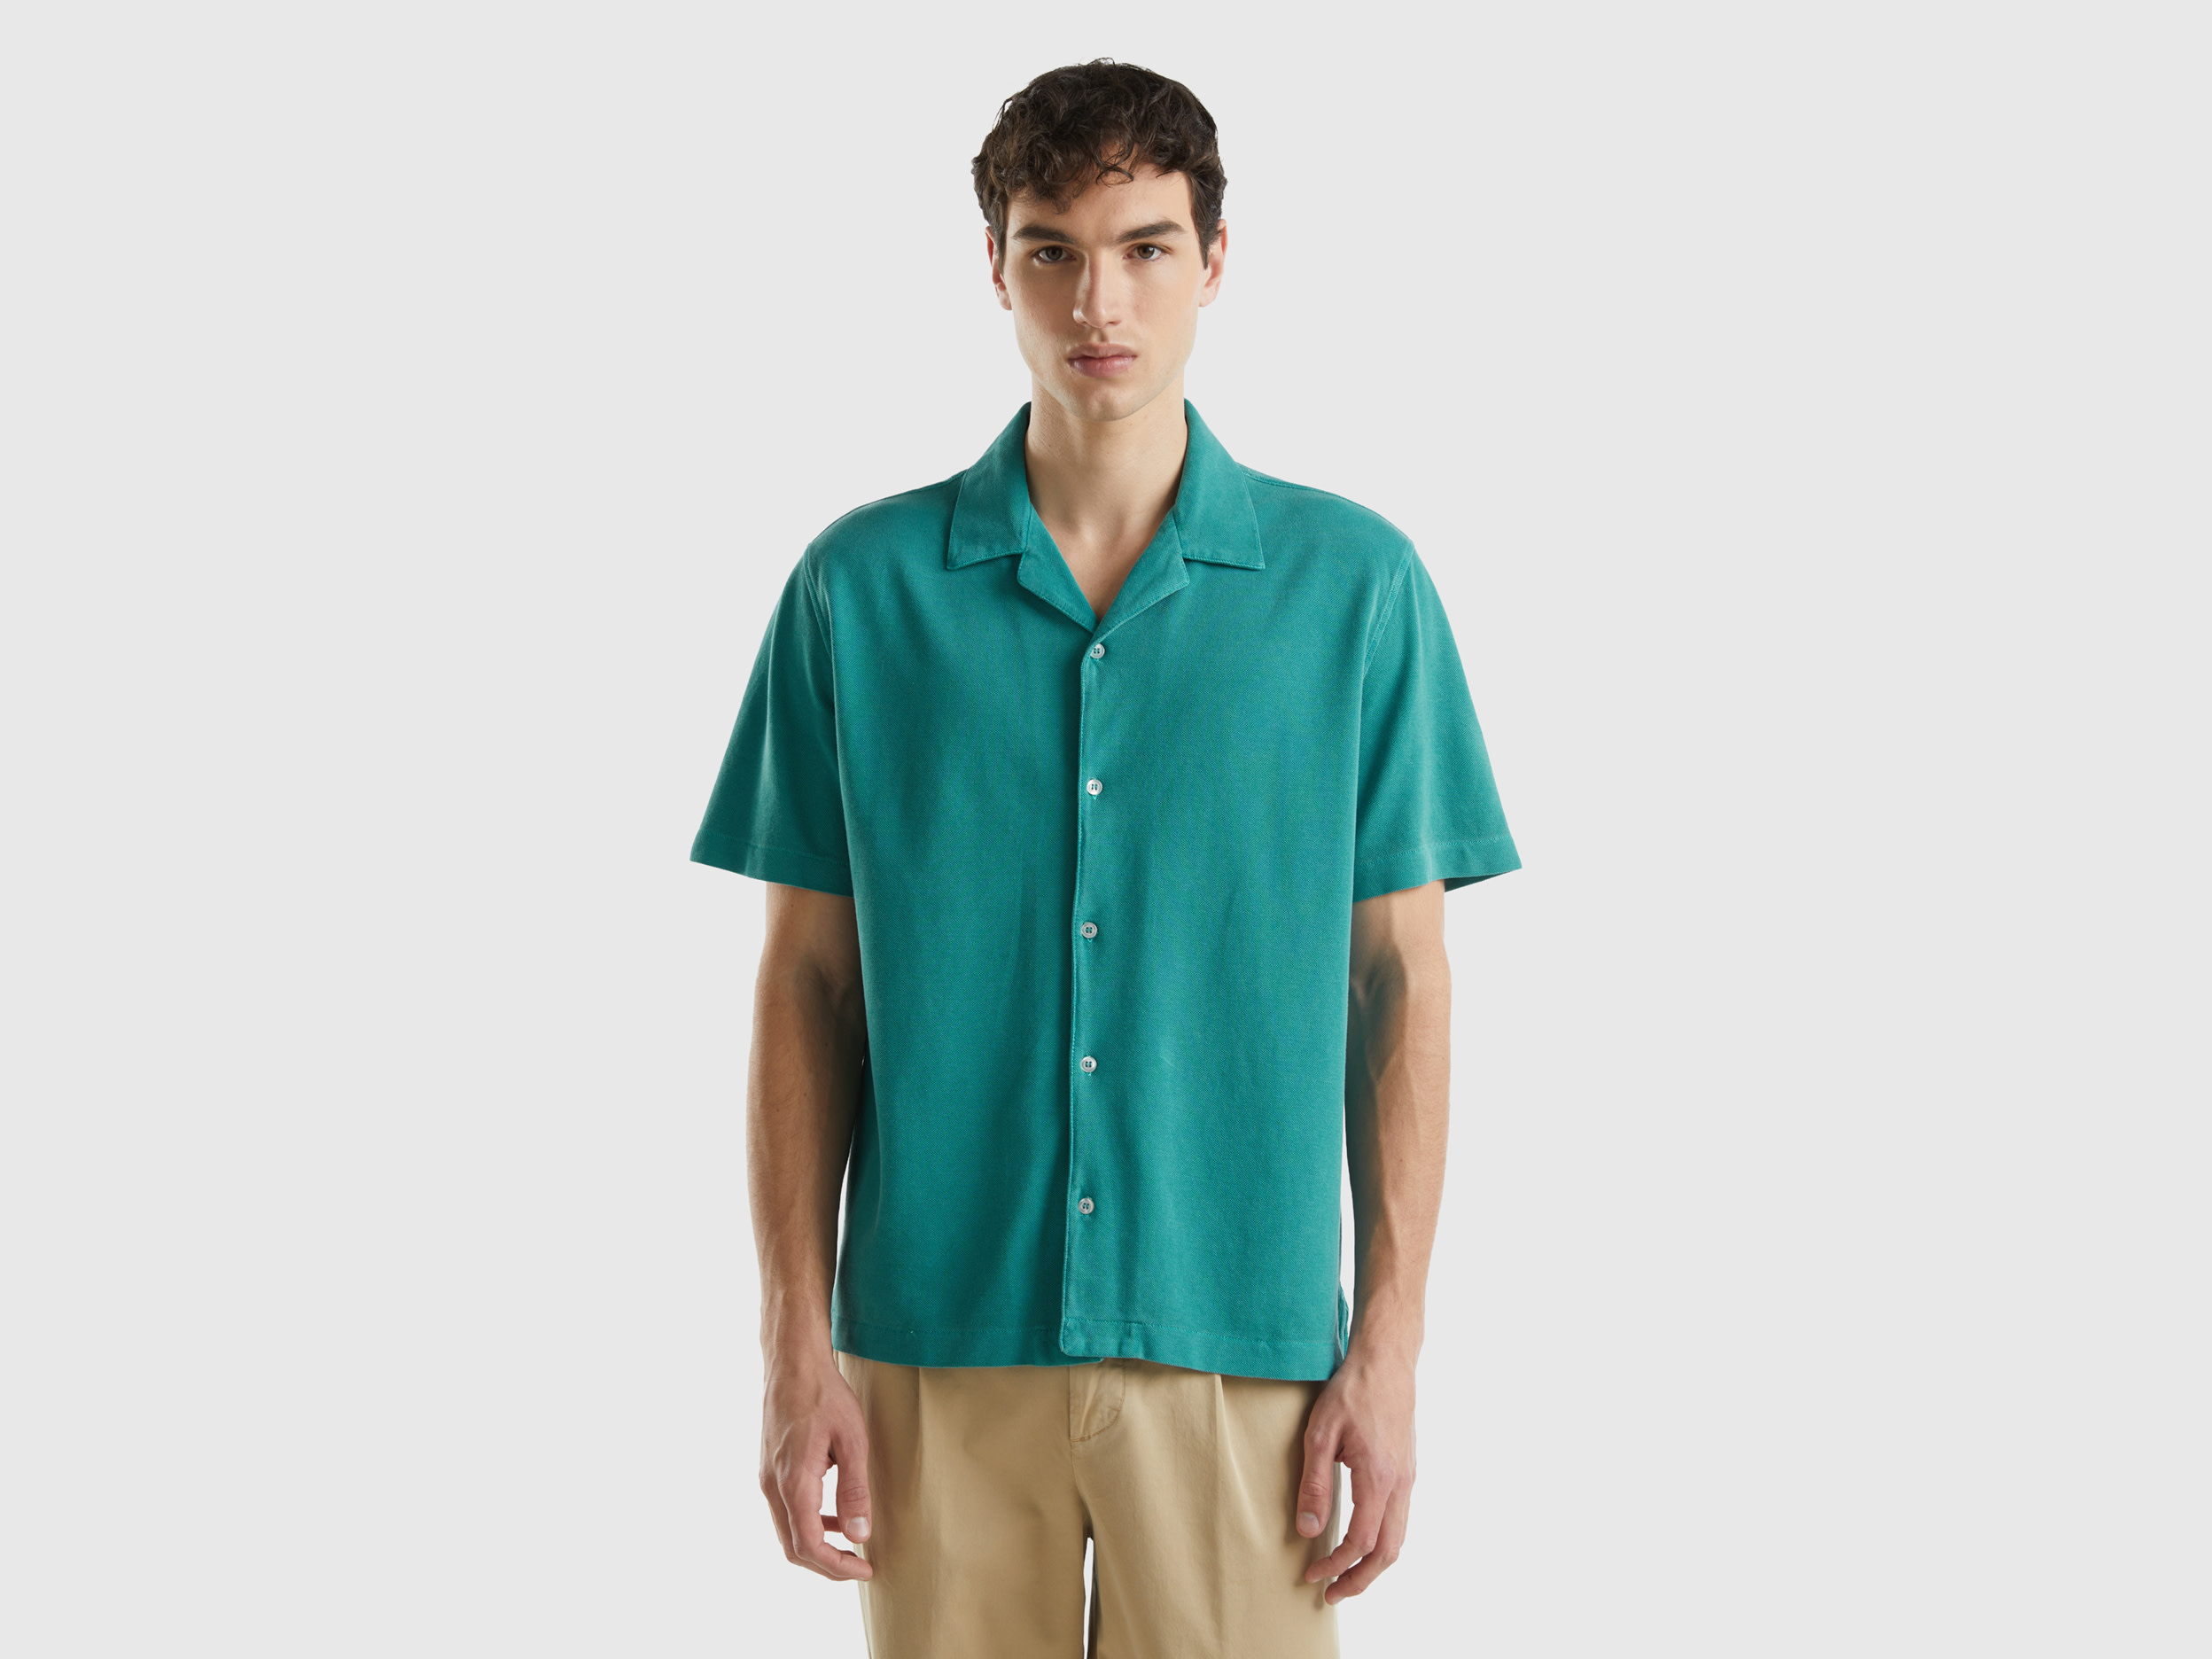 Image of Benetton, Organic Cotton Pique Shirt, size S, Teal, Men